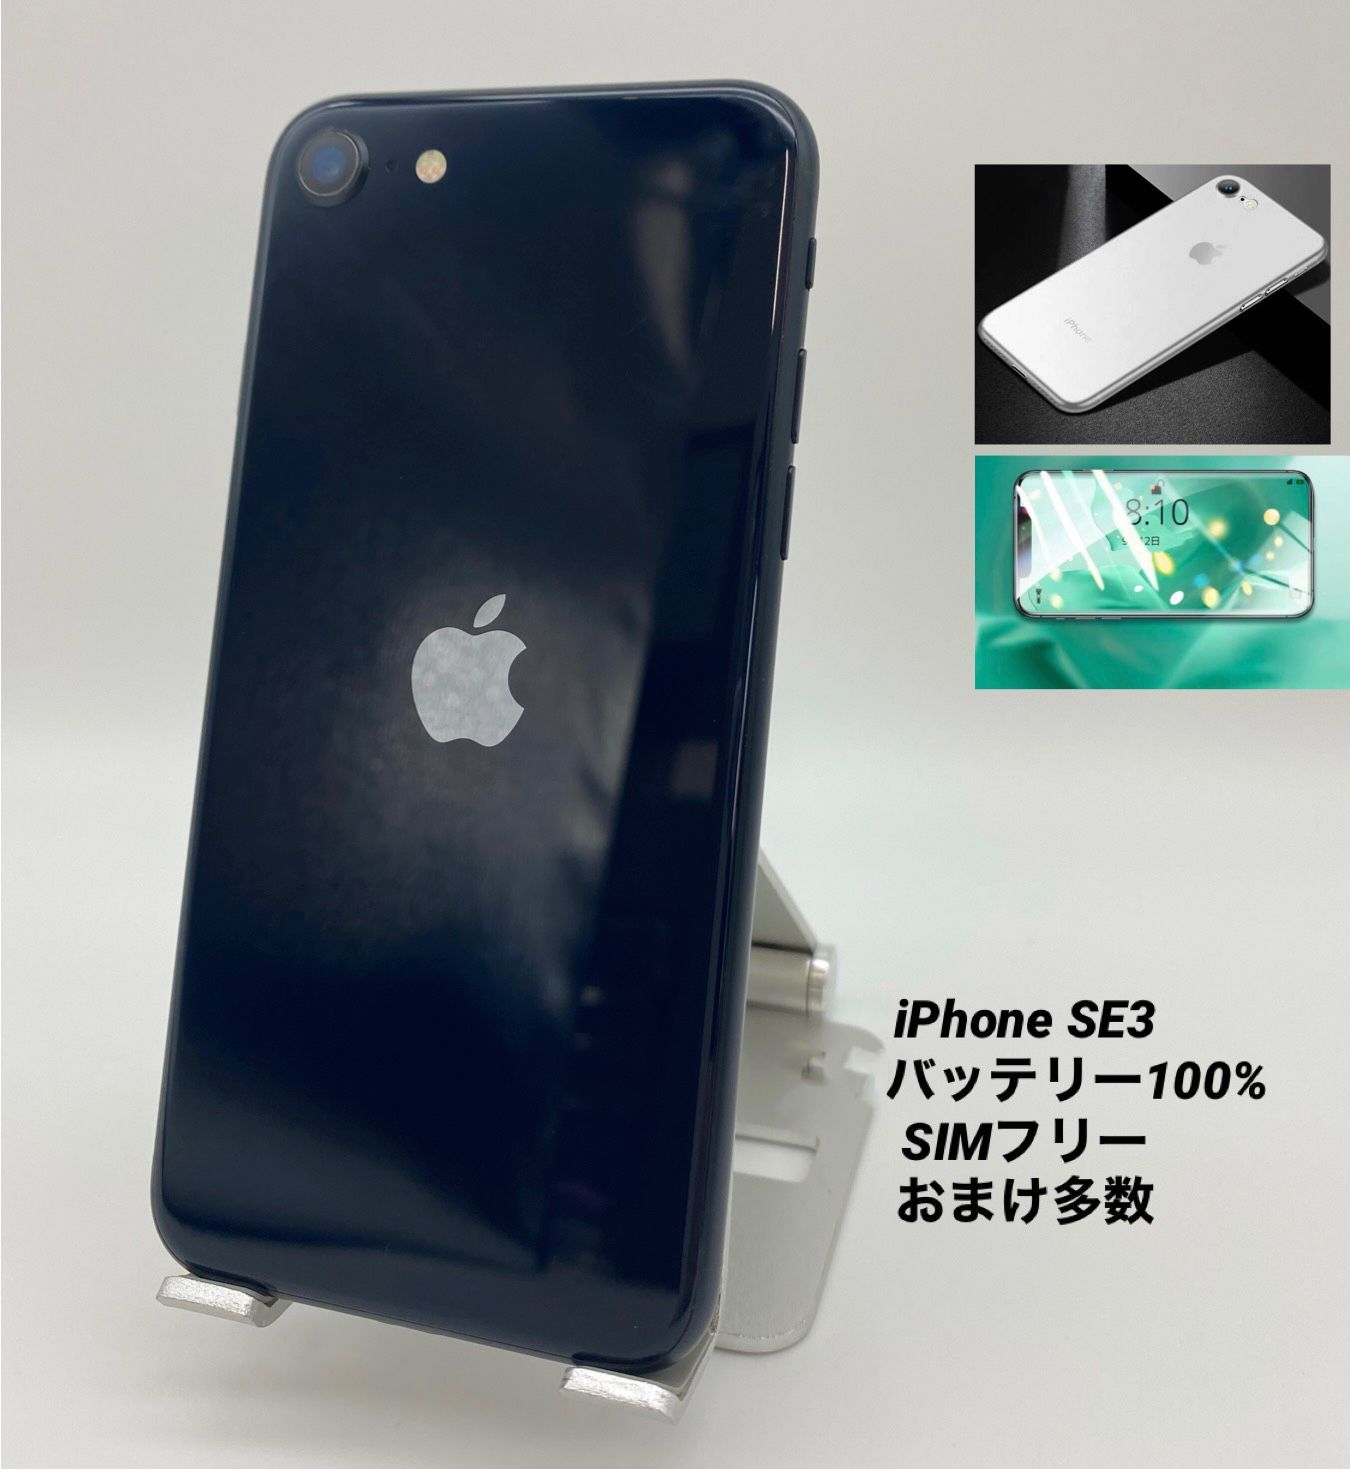 iPhone SE 第3世代 256GB ブラック/海外版シムフリー/新品バッテリー100%/新品おまけ多数 SE3-097 - メルカリ